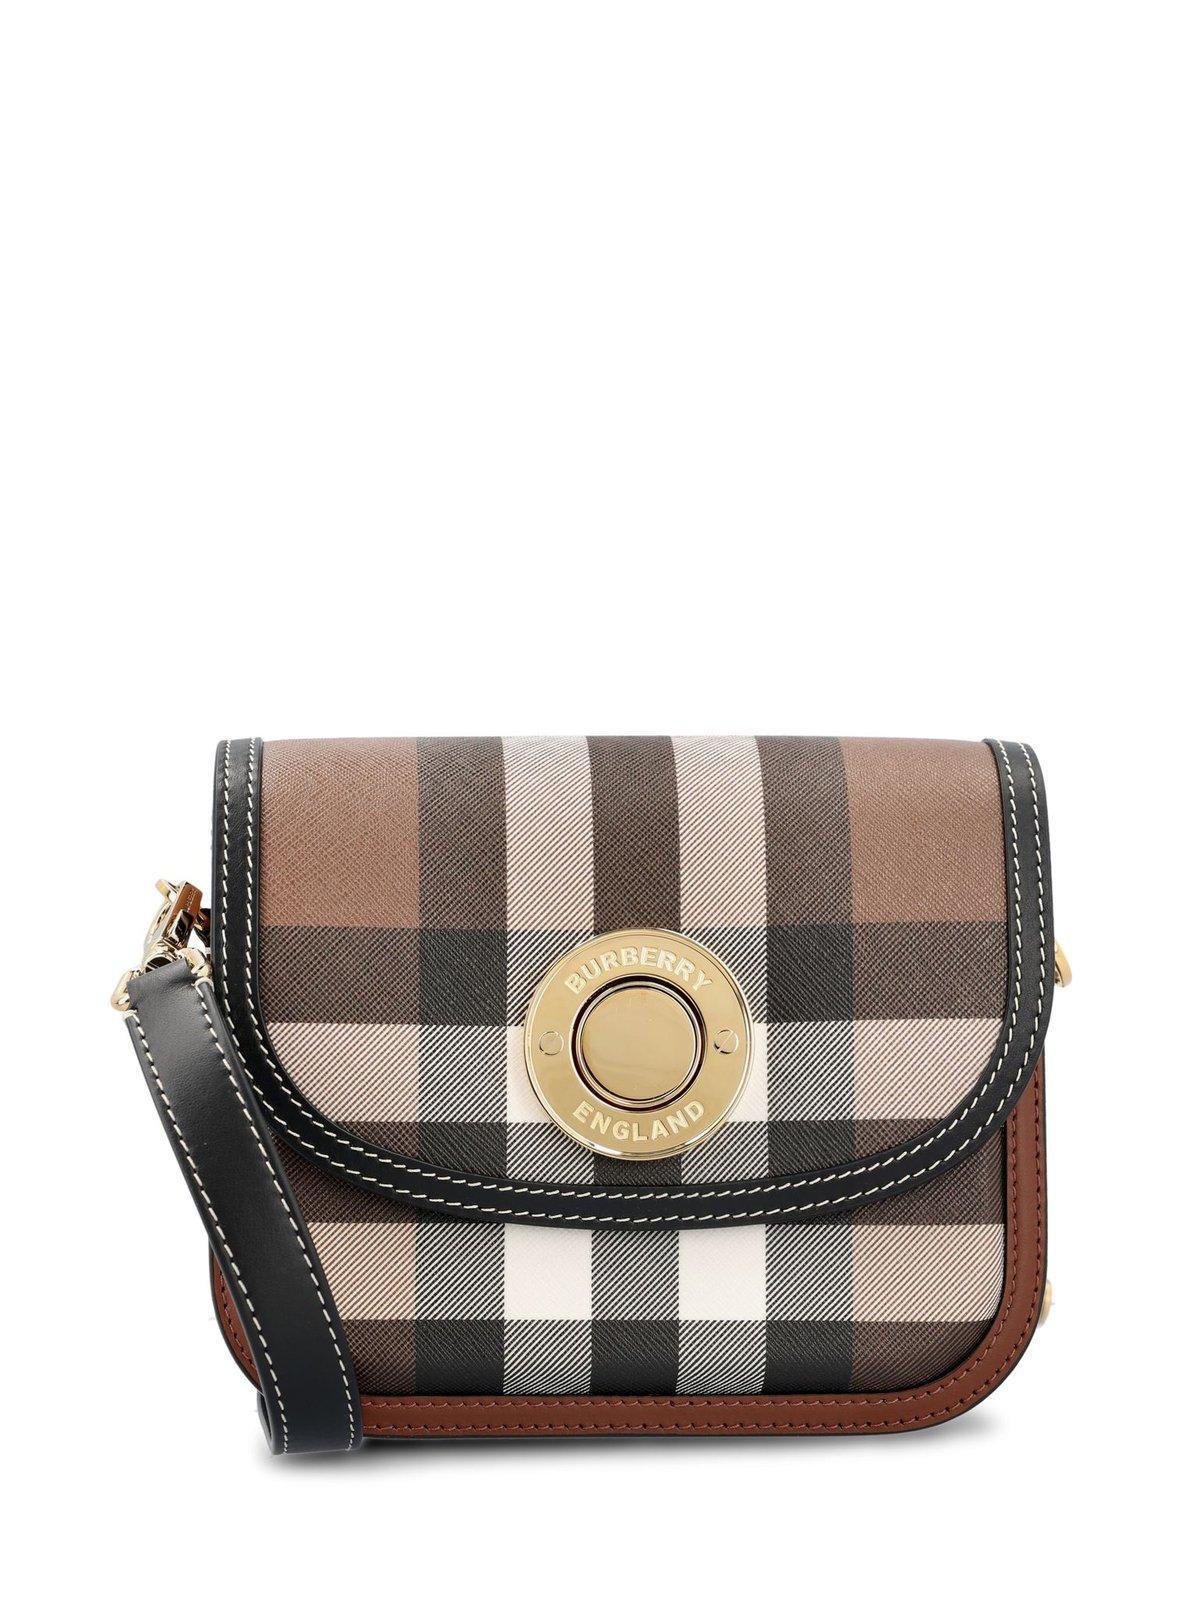 Small Checkered Womens Handbag Crossbody Bag with Coin Pouch